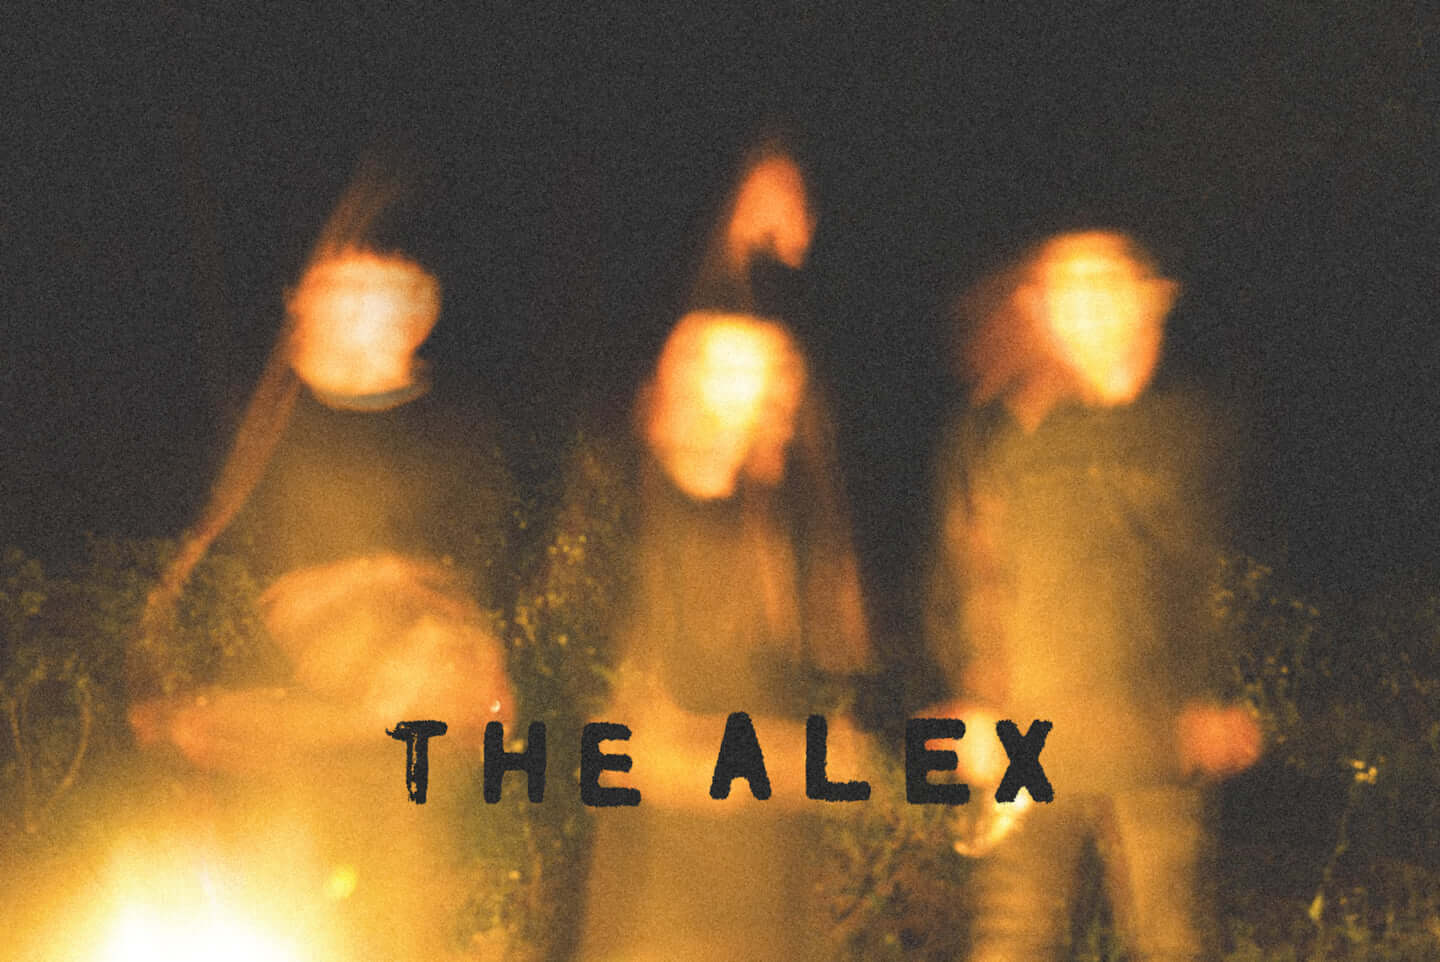 THE ALEX